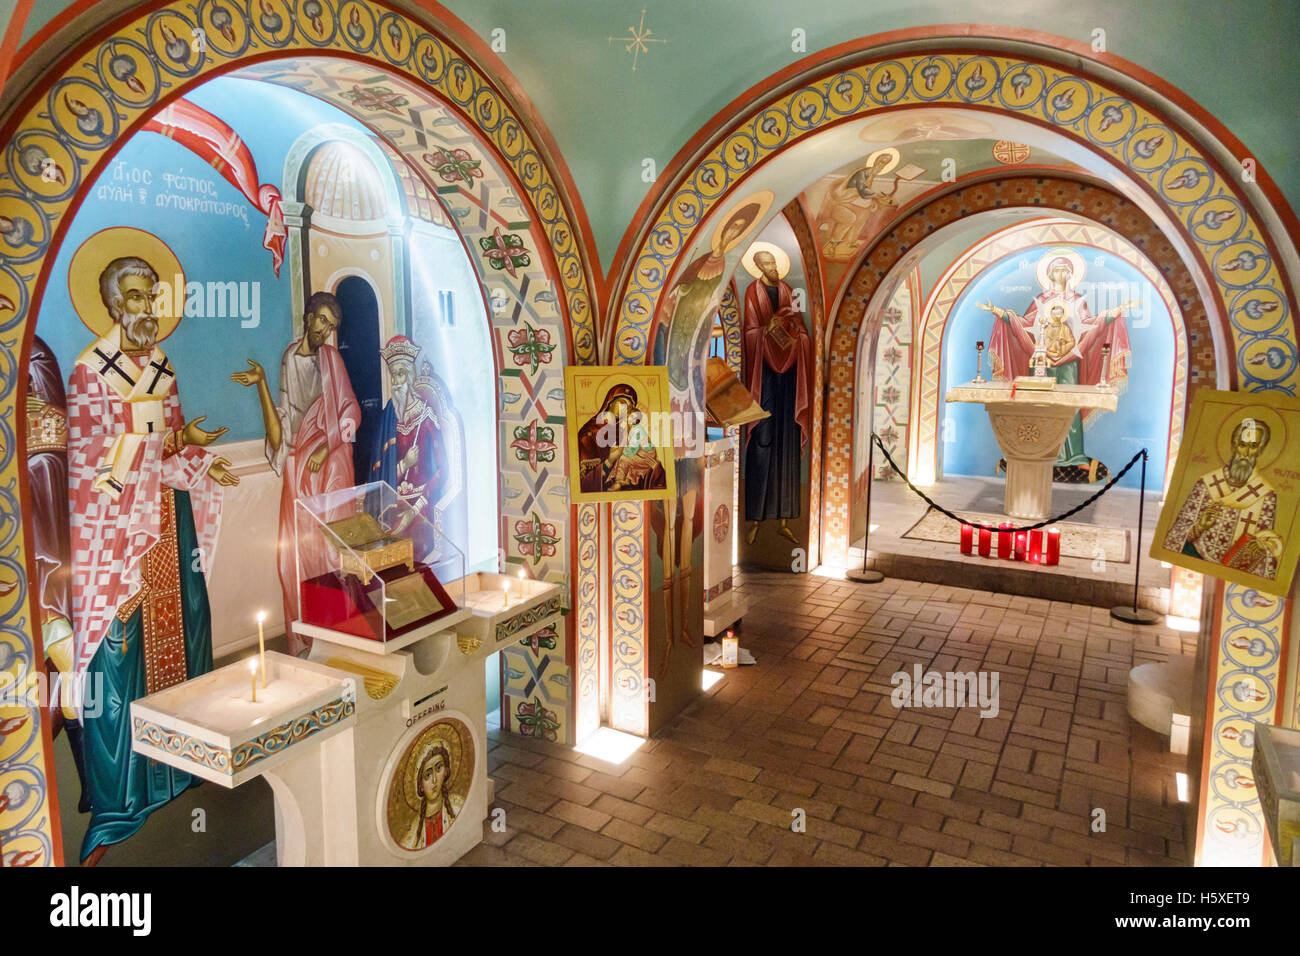 St. Saint Augustine Florida,St. Photios Greek Orthodox National Shrine,interior inside,icons,art,arches,religious,FL160802080 Stock Photo